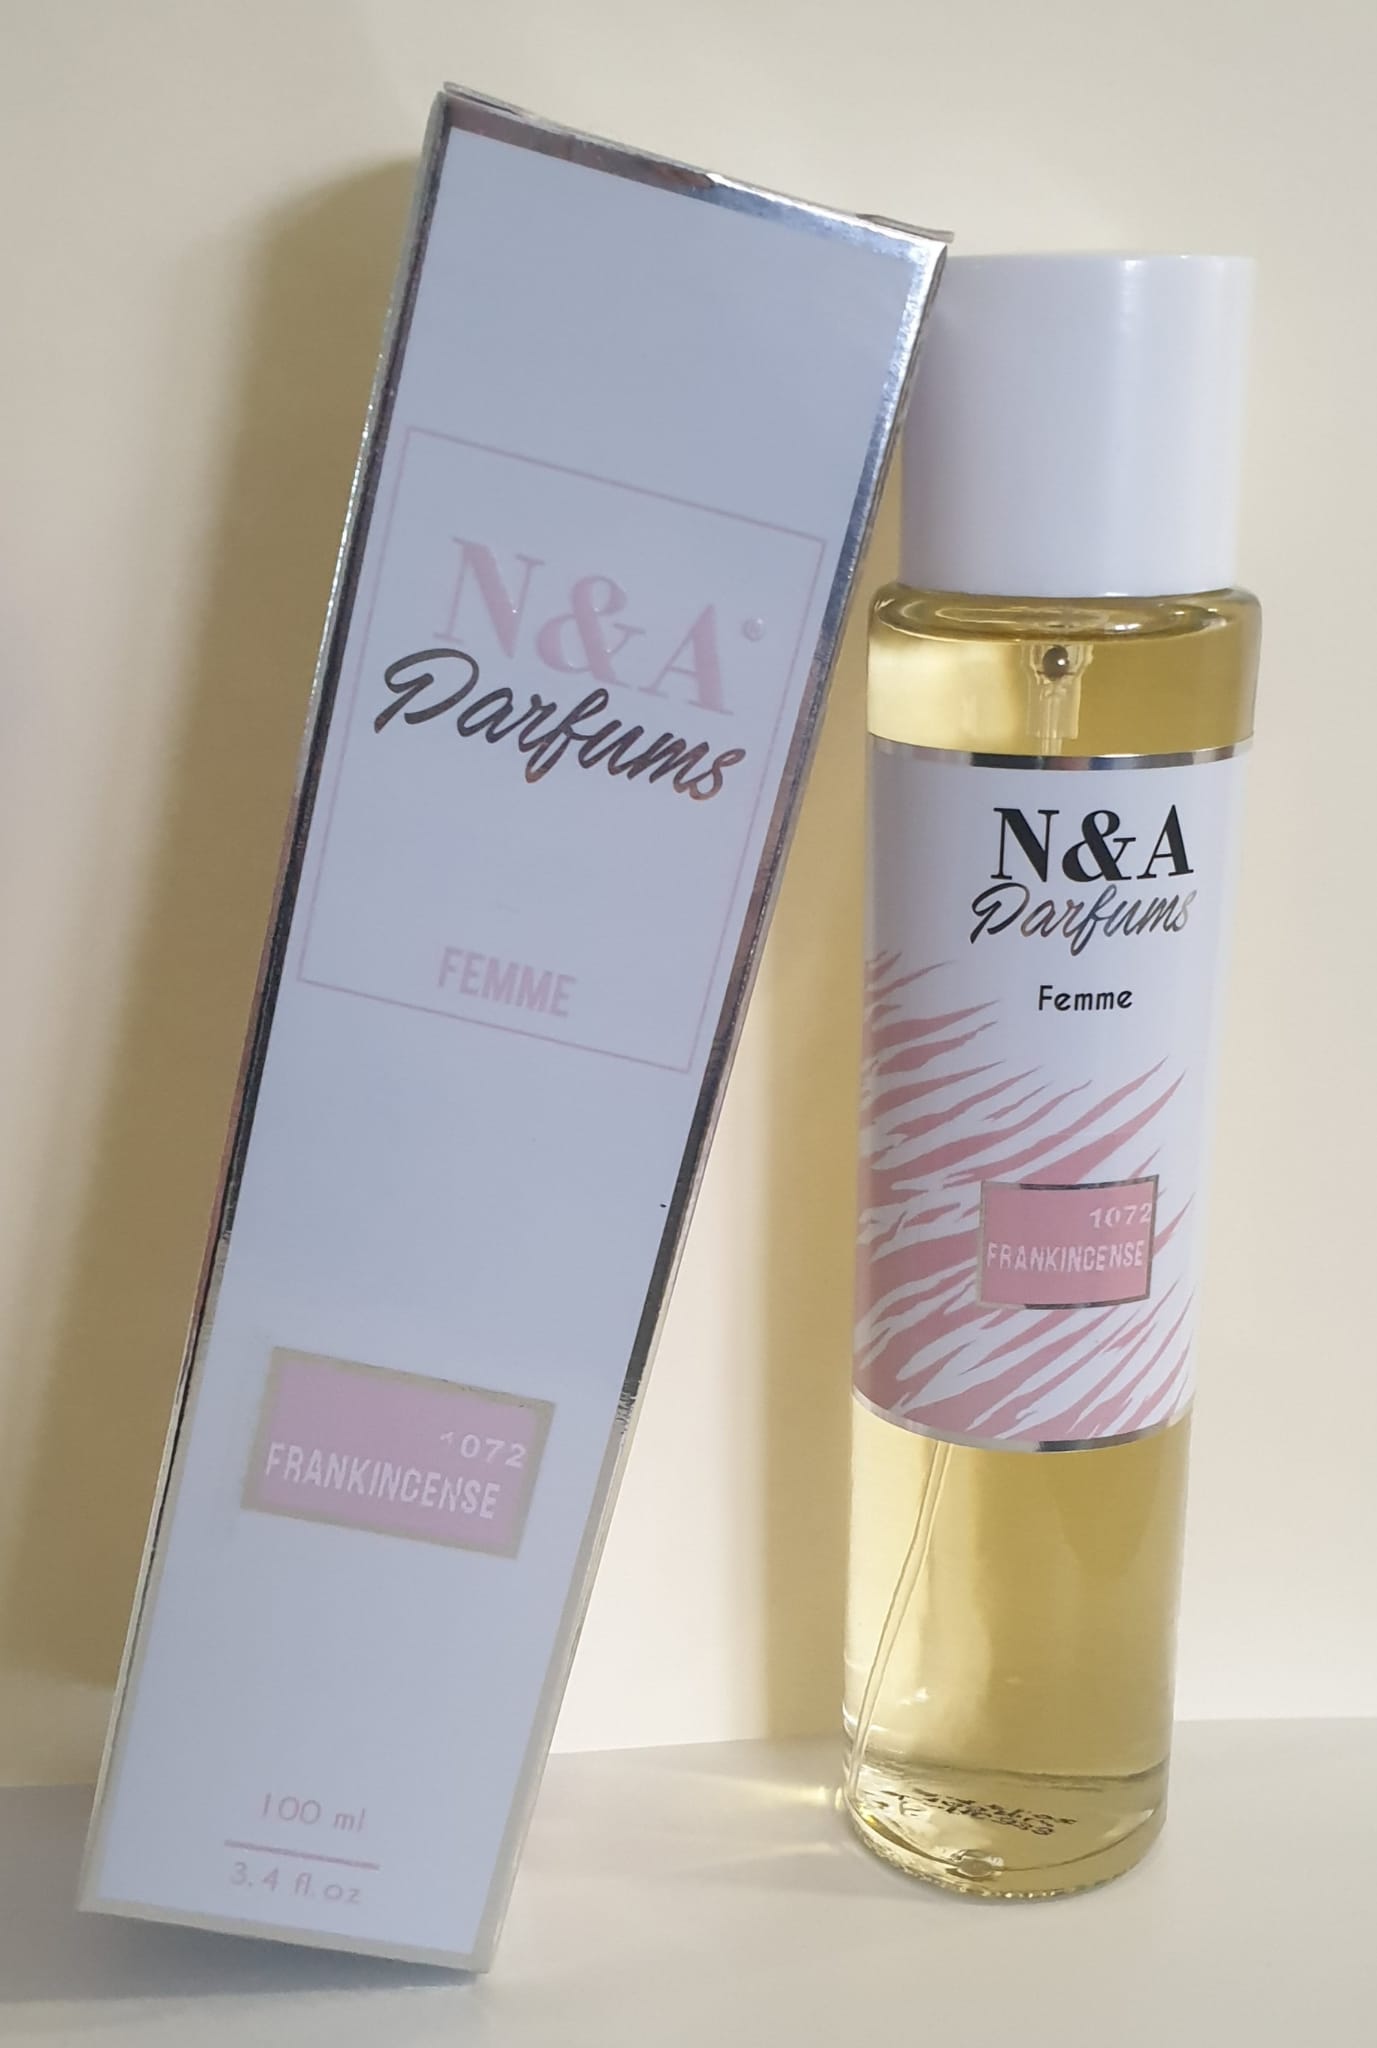  Perfume N&A 1072 100ML - Se Gosta de PACO RABANNE FAME experimente a Nossa Fragrância